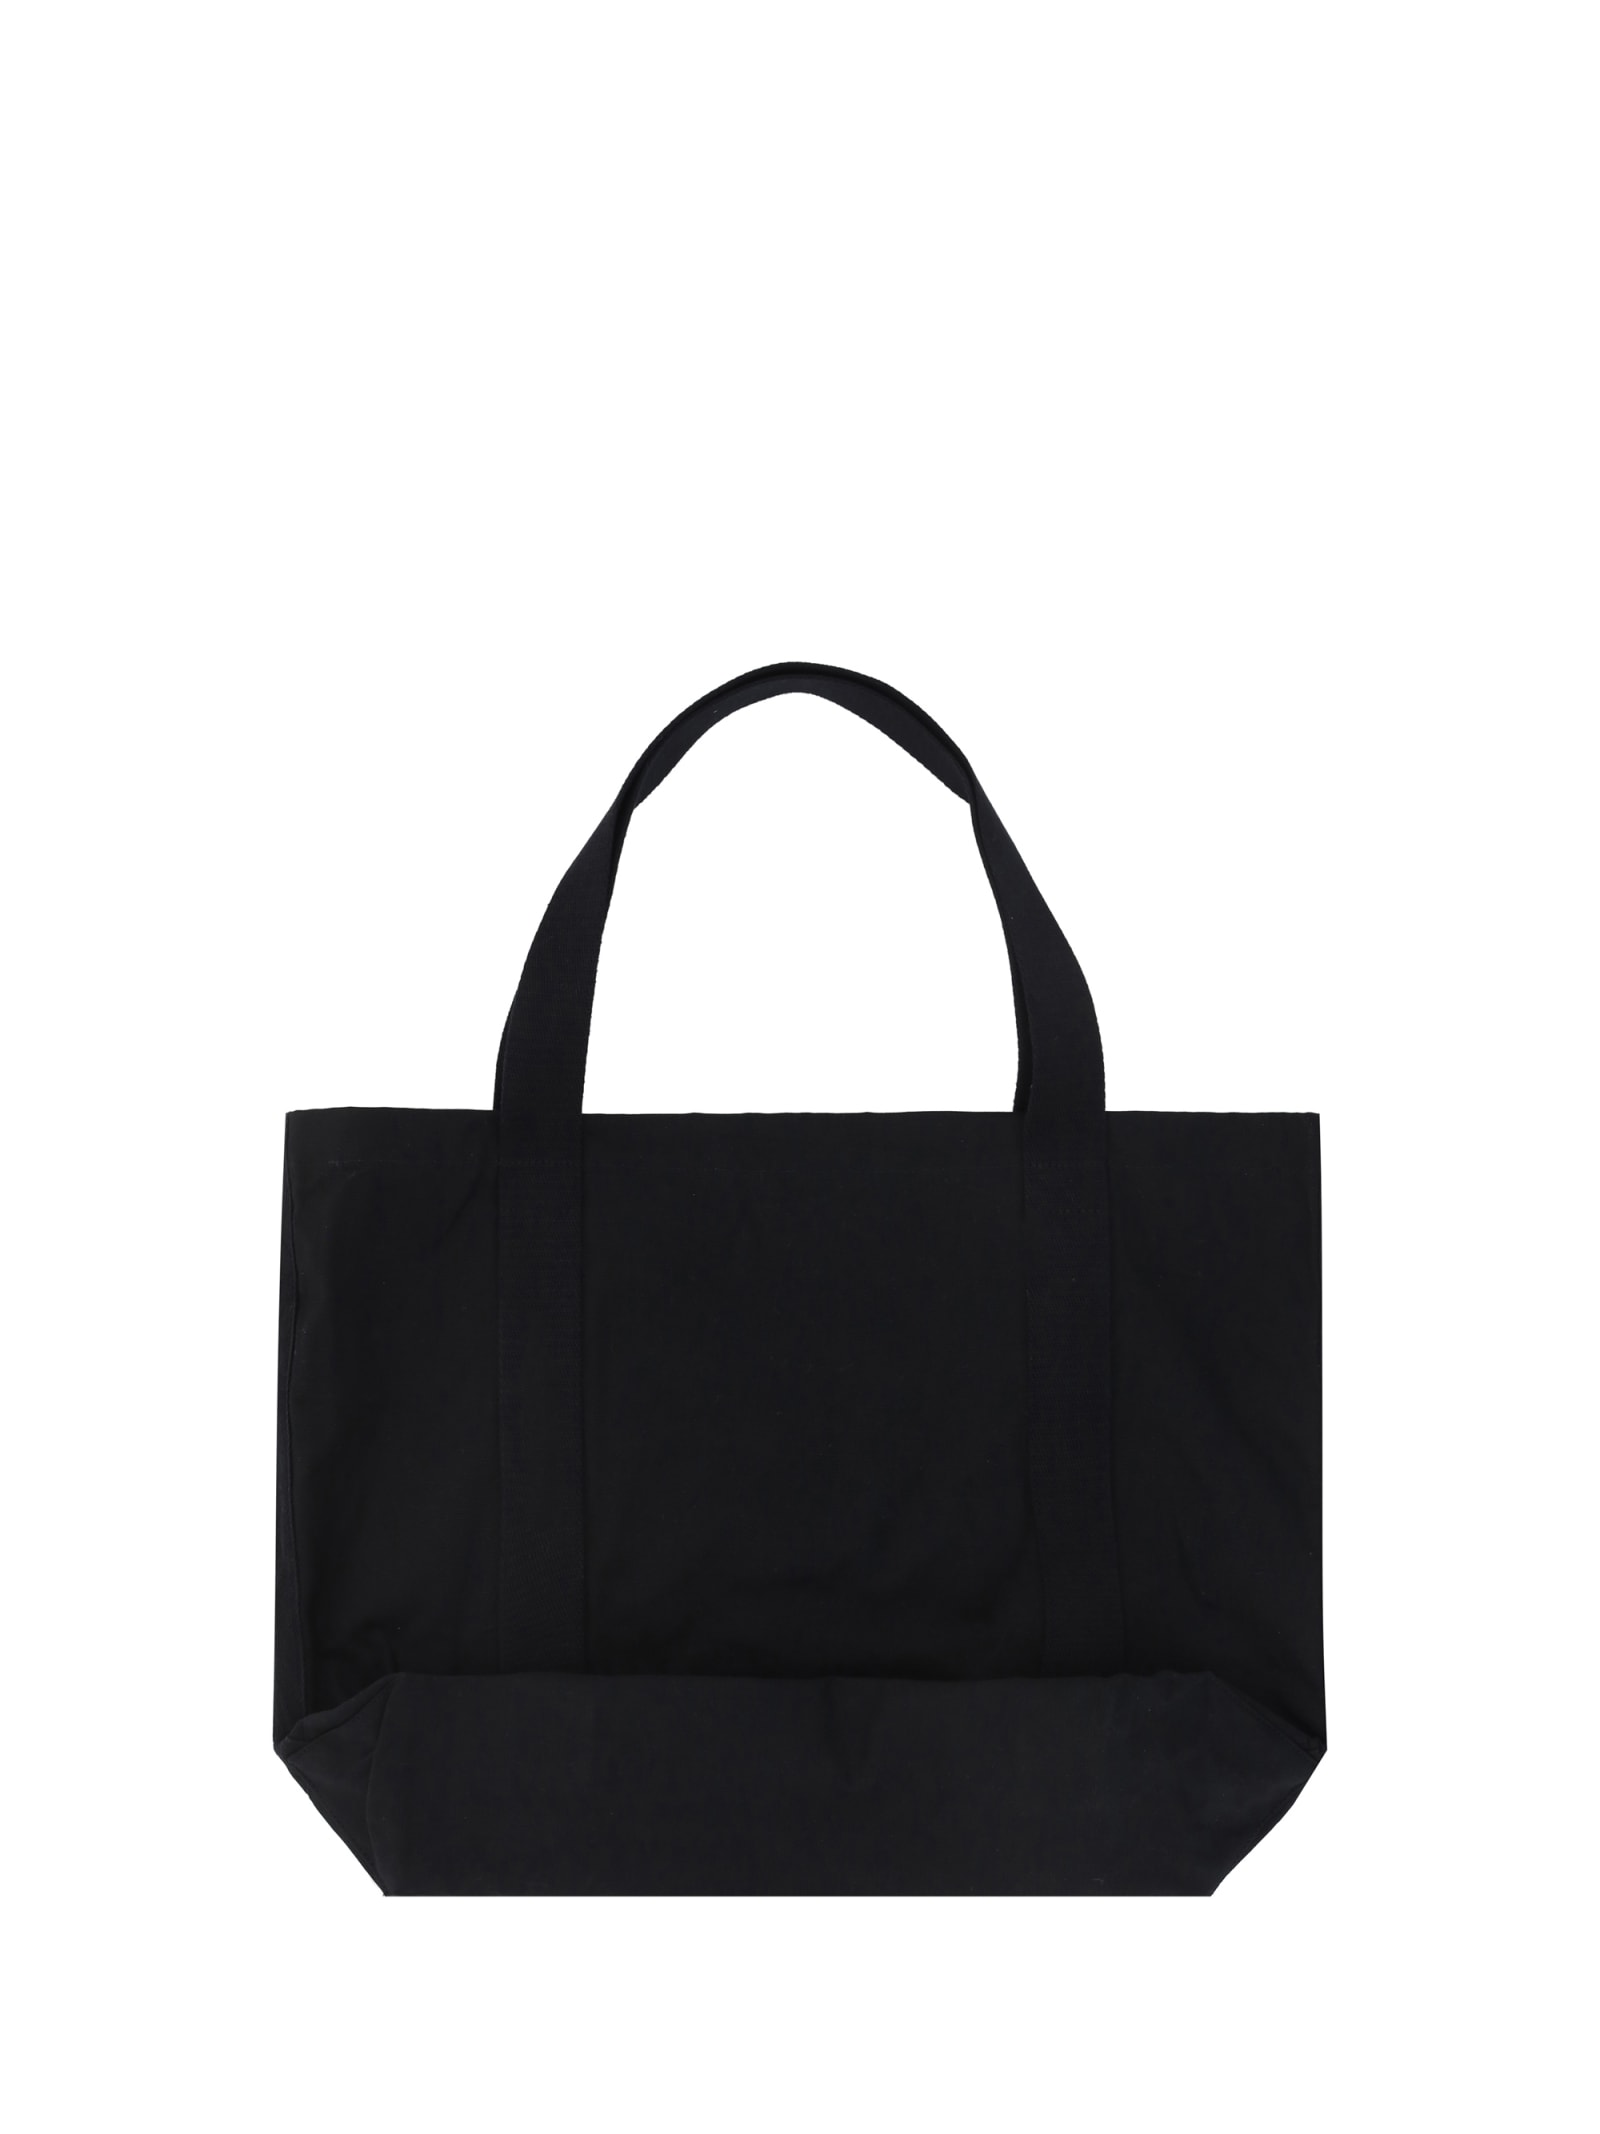 Shop Maison Kitsuné Palais Royal Shoulder Shopping Bag In Black